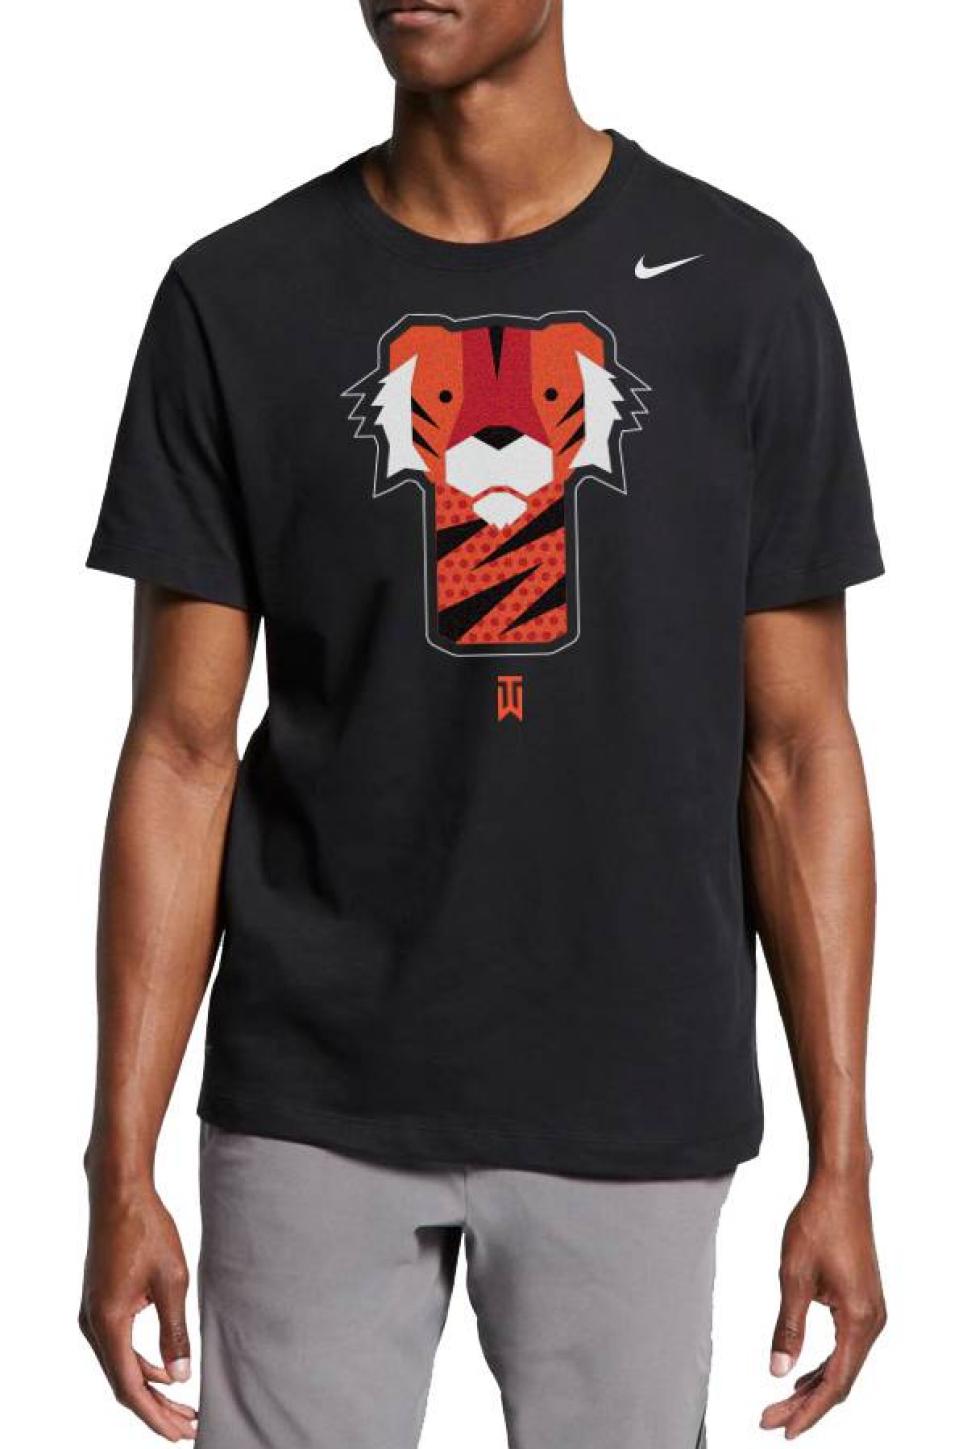 Nike Men's Tiger Woods “Frank” Golf T-Shirt